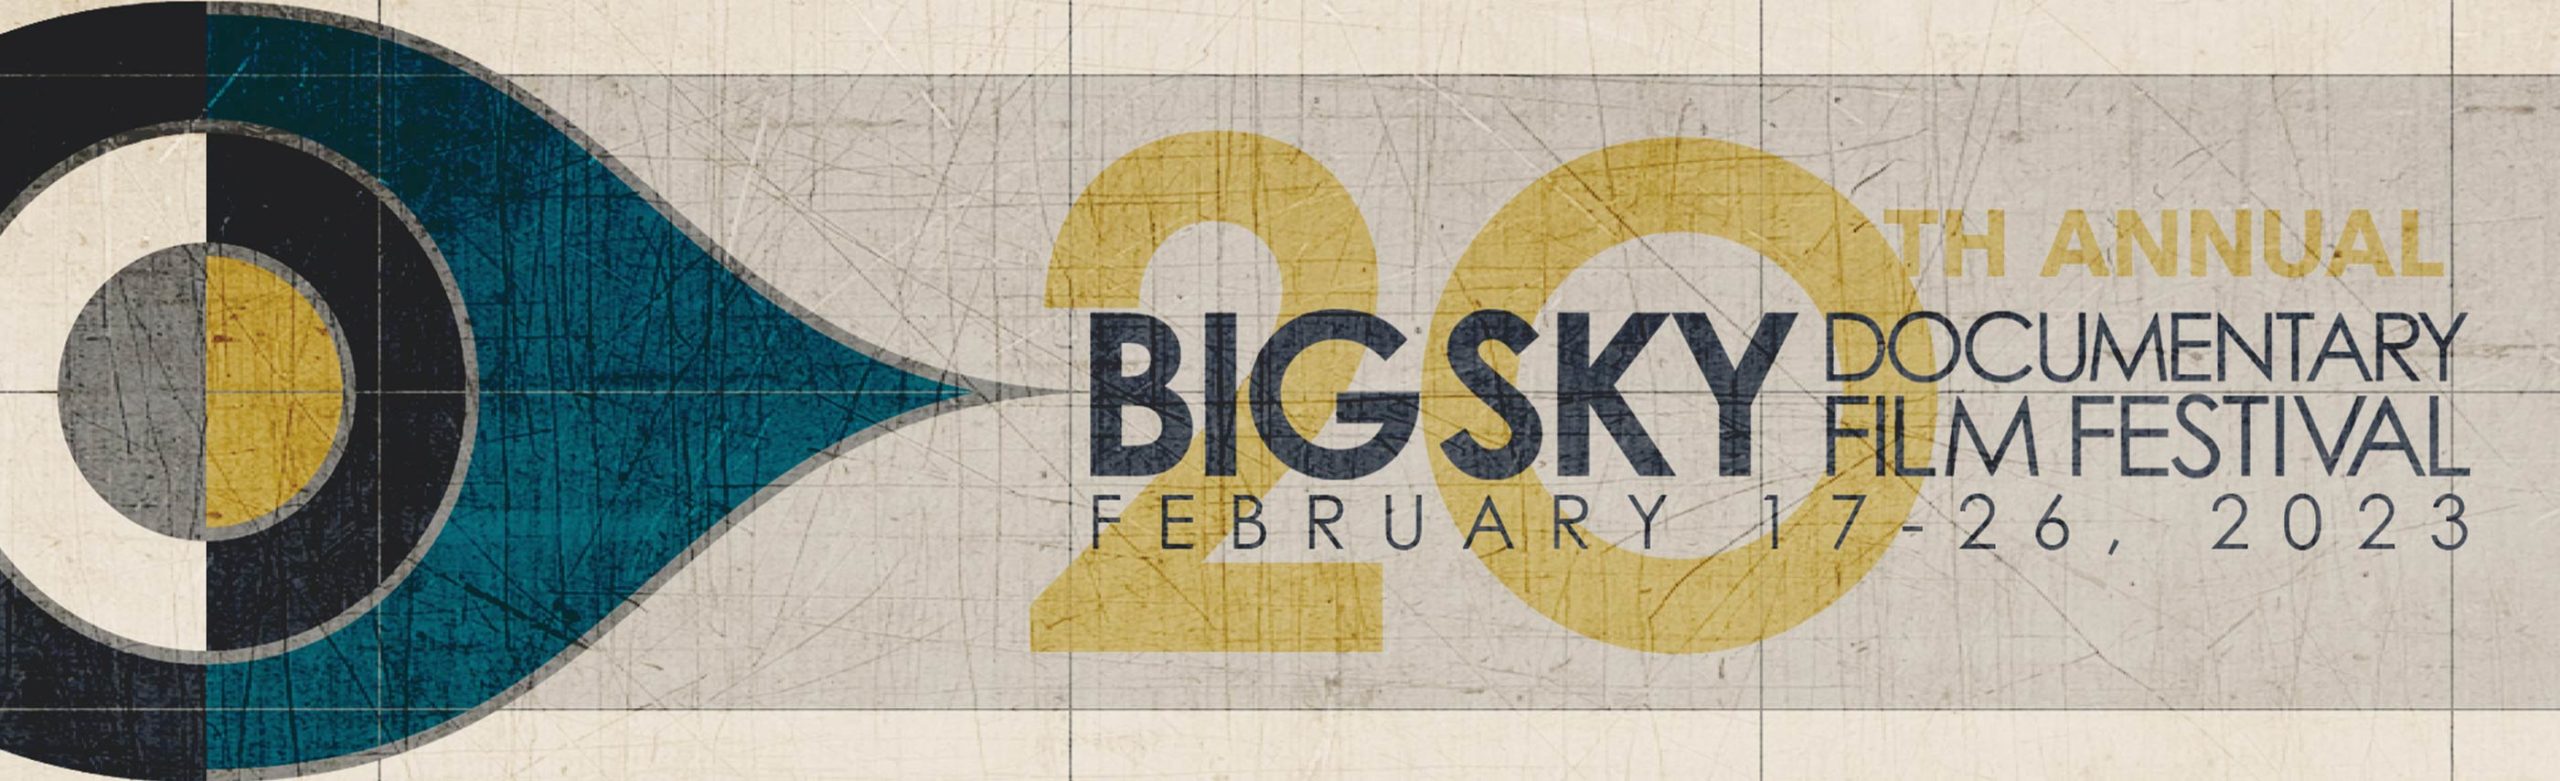 20th Annual Big Sky Documentary Film Festival in Missoula, Montana